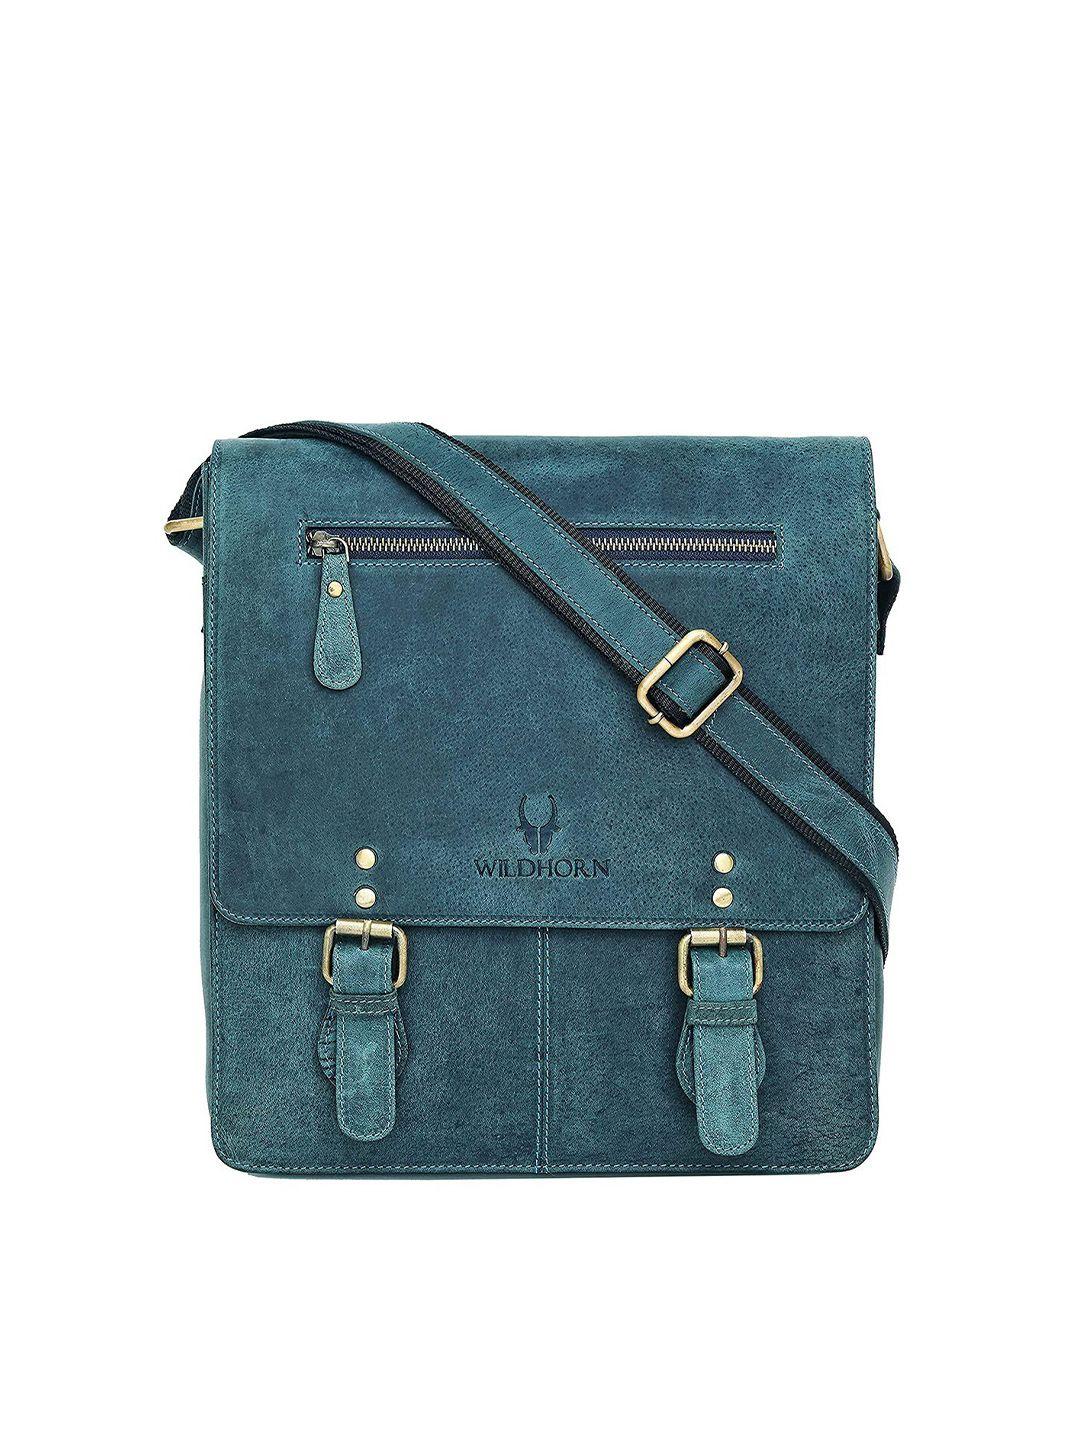 wildhorn men blue textured genuine leather messenger bag